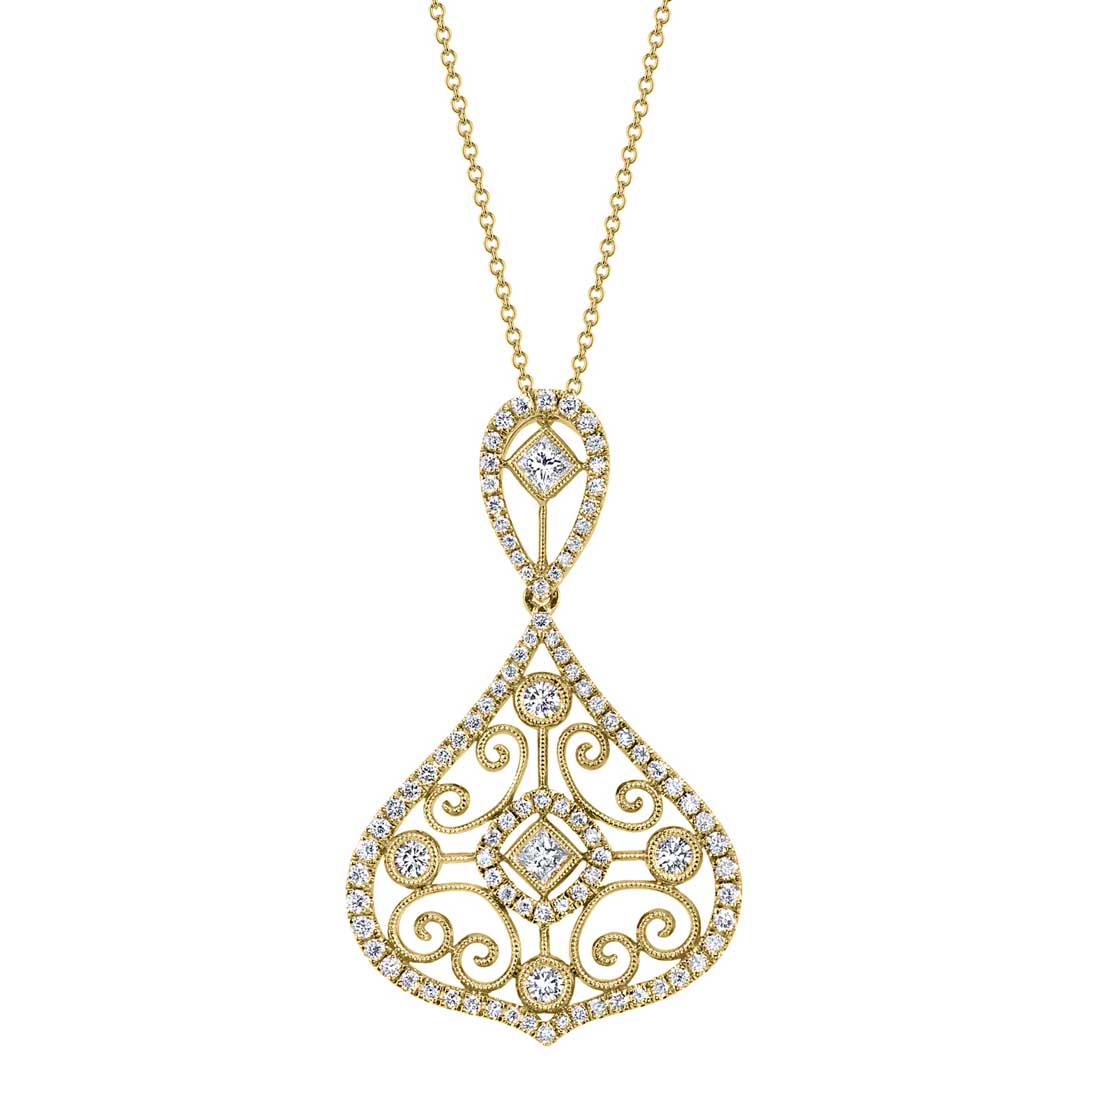 Vintage Rose Gold Diamond Necklace